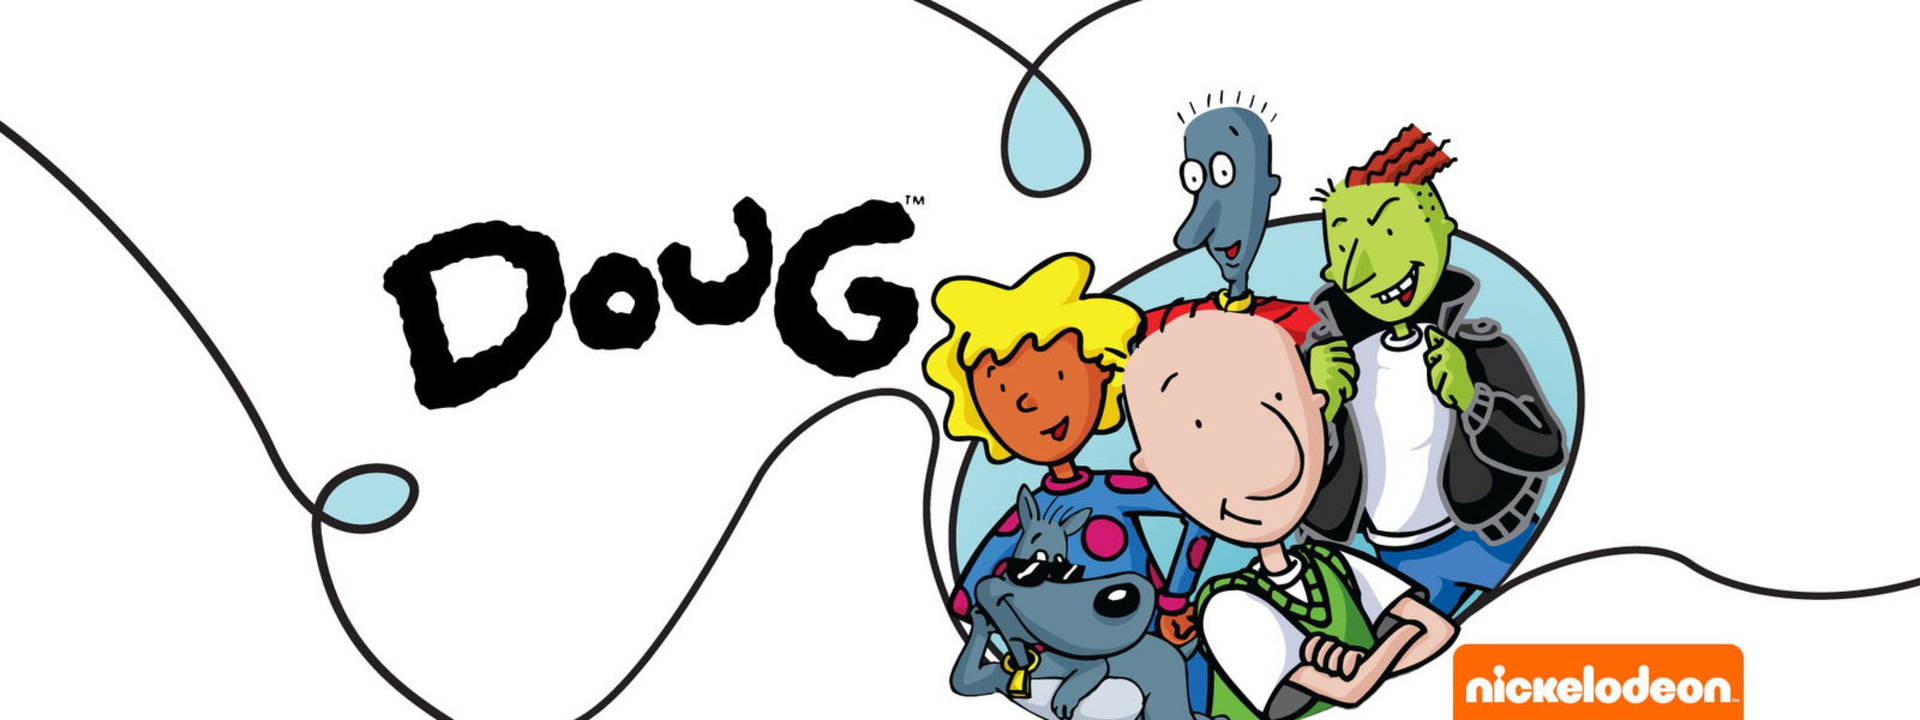 Doug Nickelodeon Poster Background